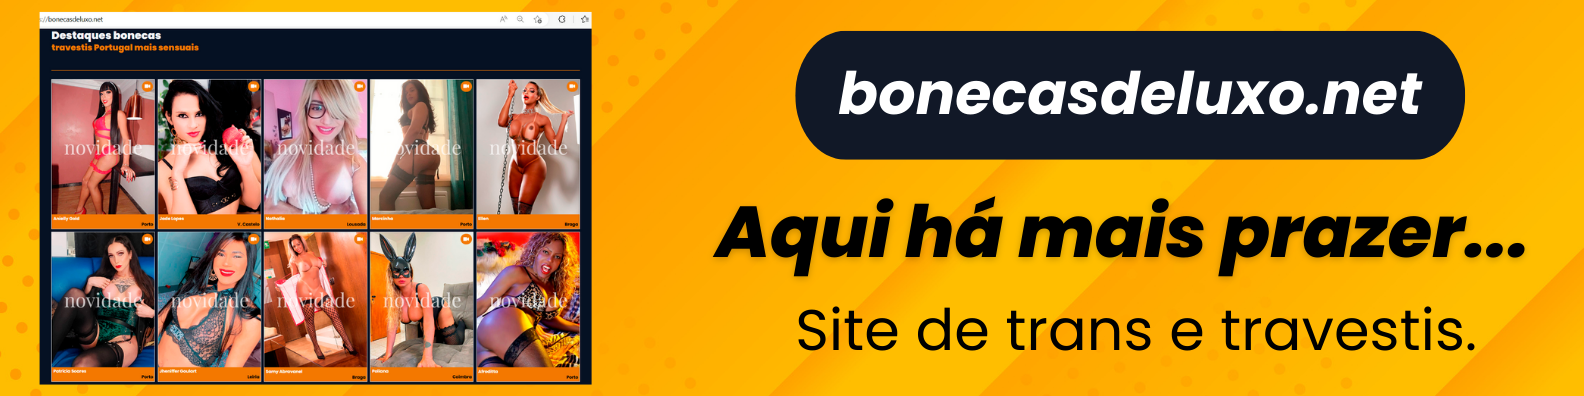 Banner Bonecasdeluxo - Publicidade